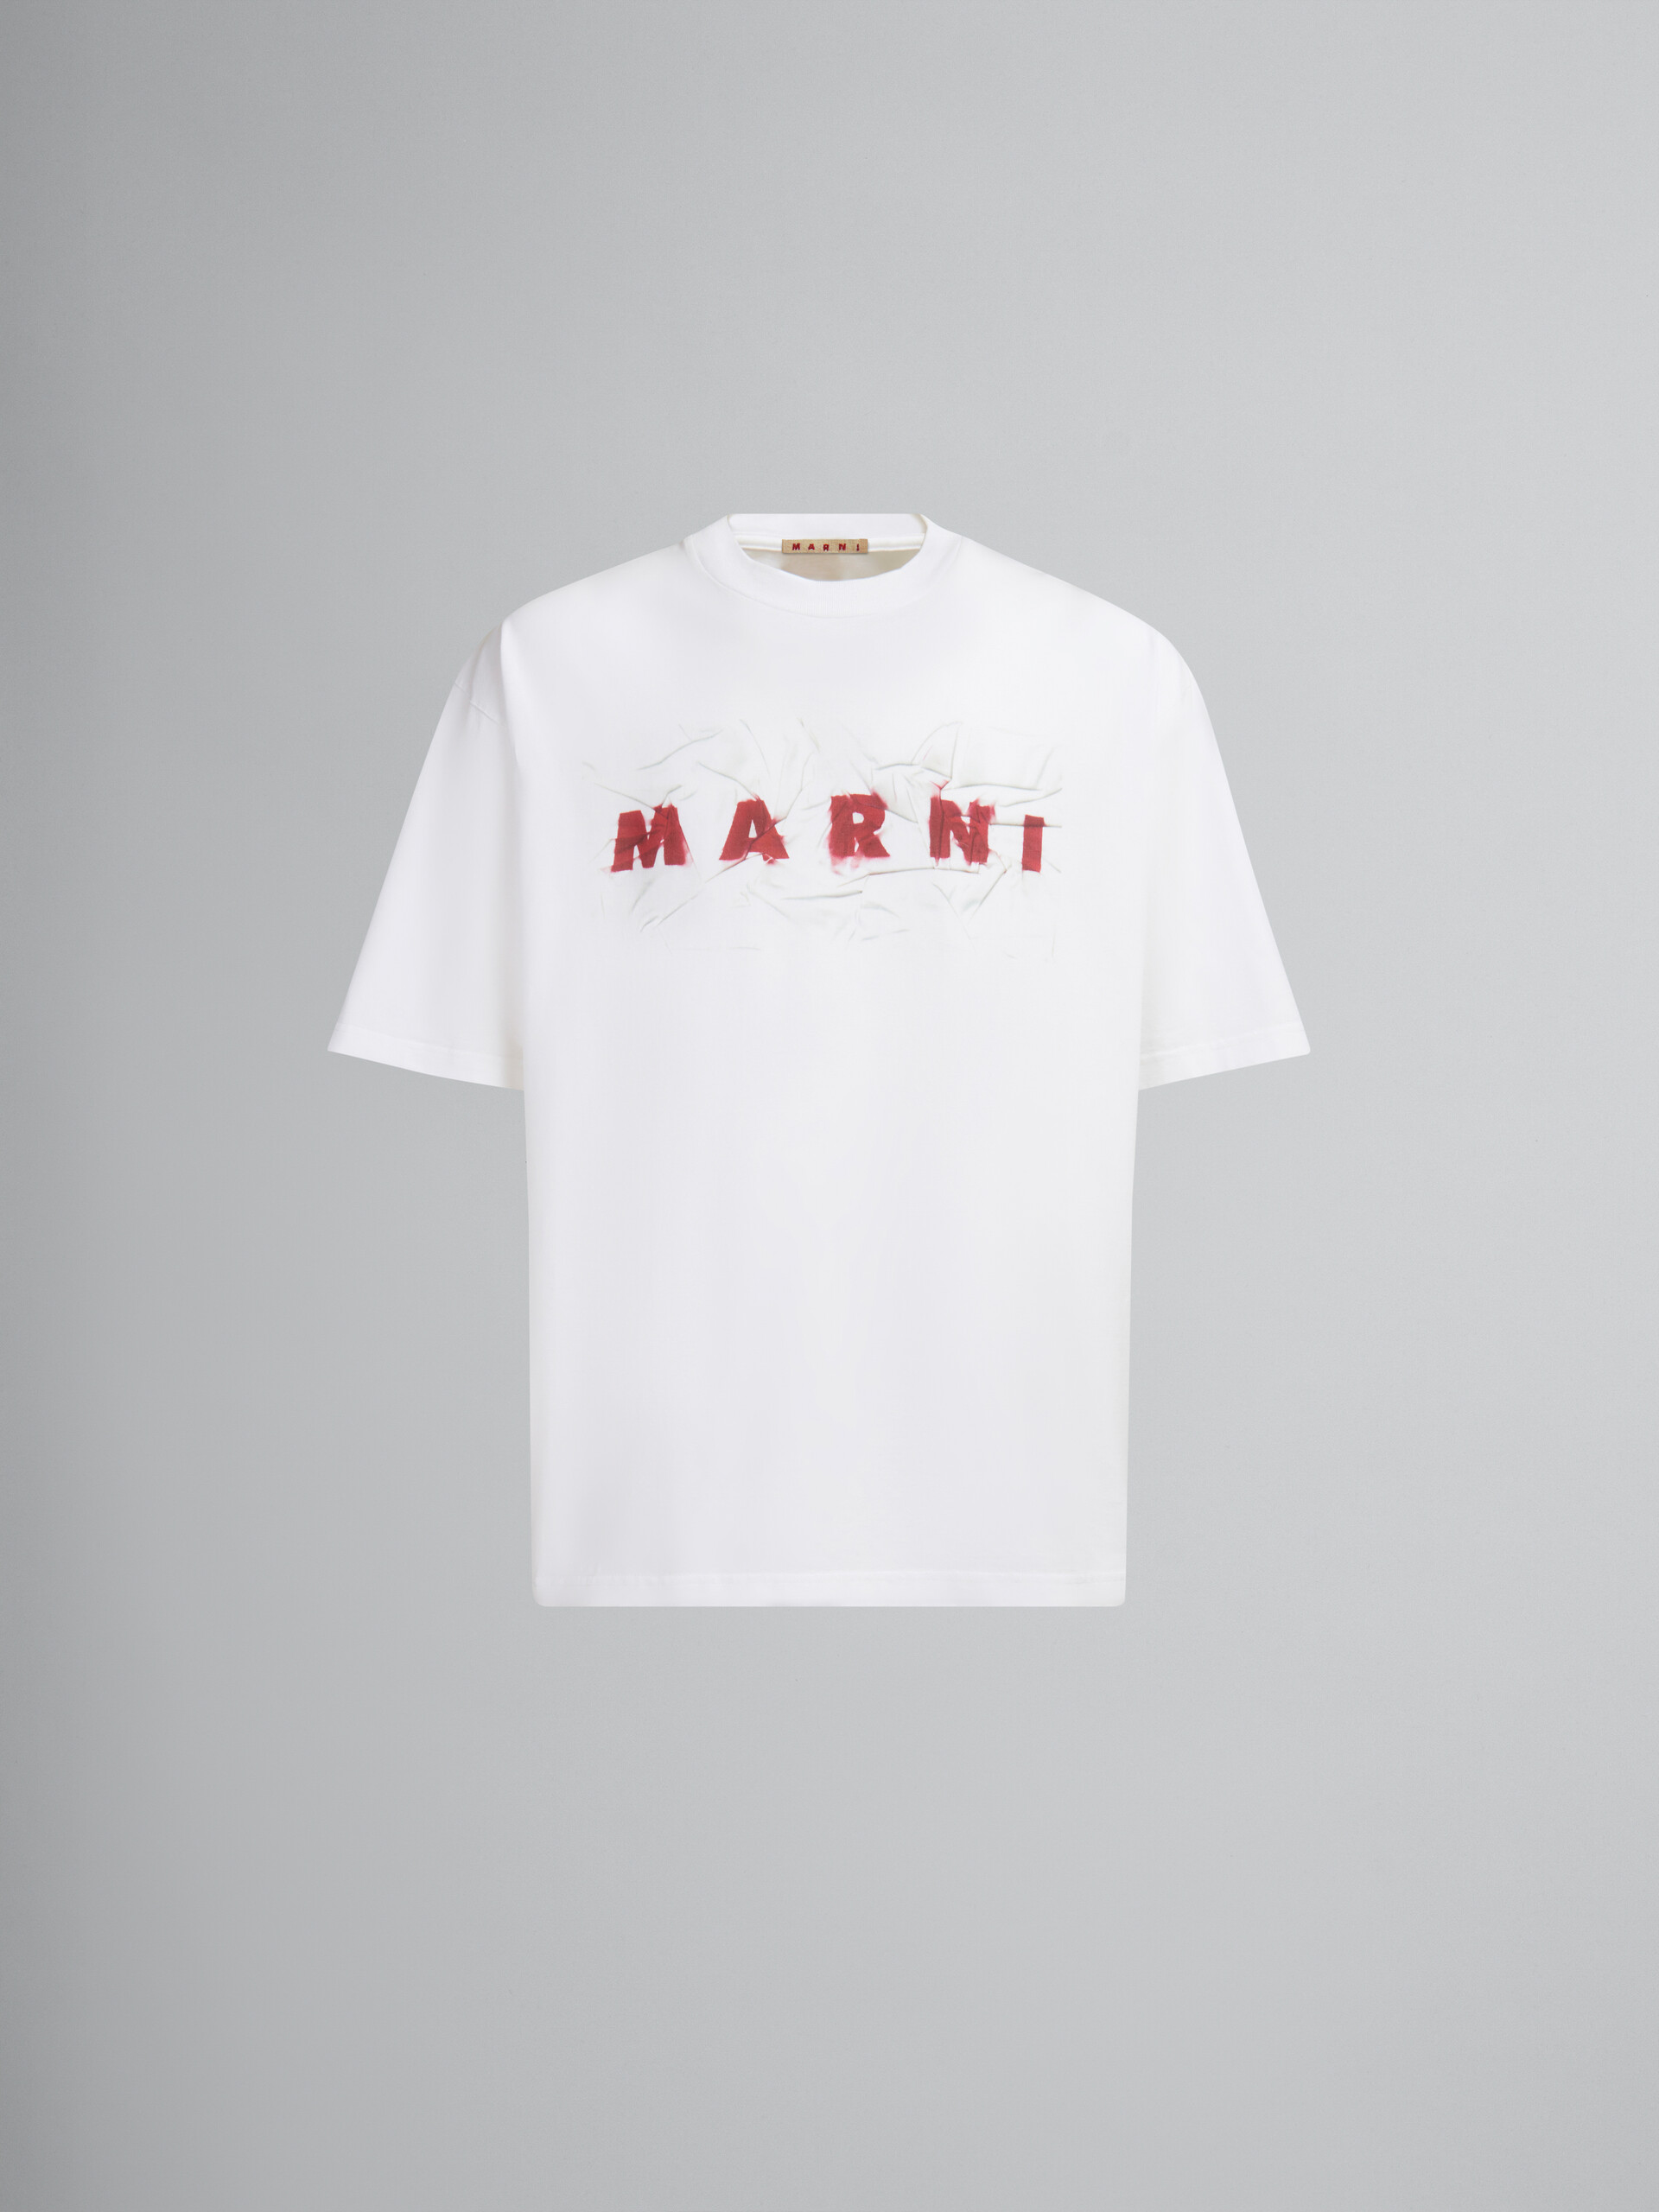 Weißes T-Shirt aus-Baumwolle mit geknittertem Marni-Logo - T-shirts - Image 1